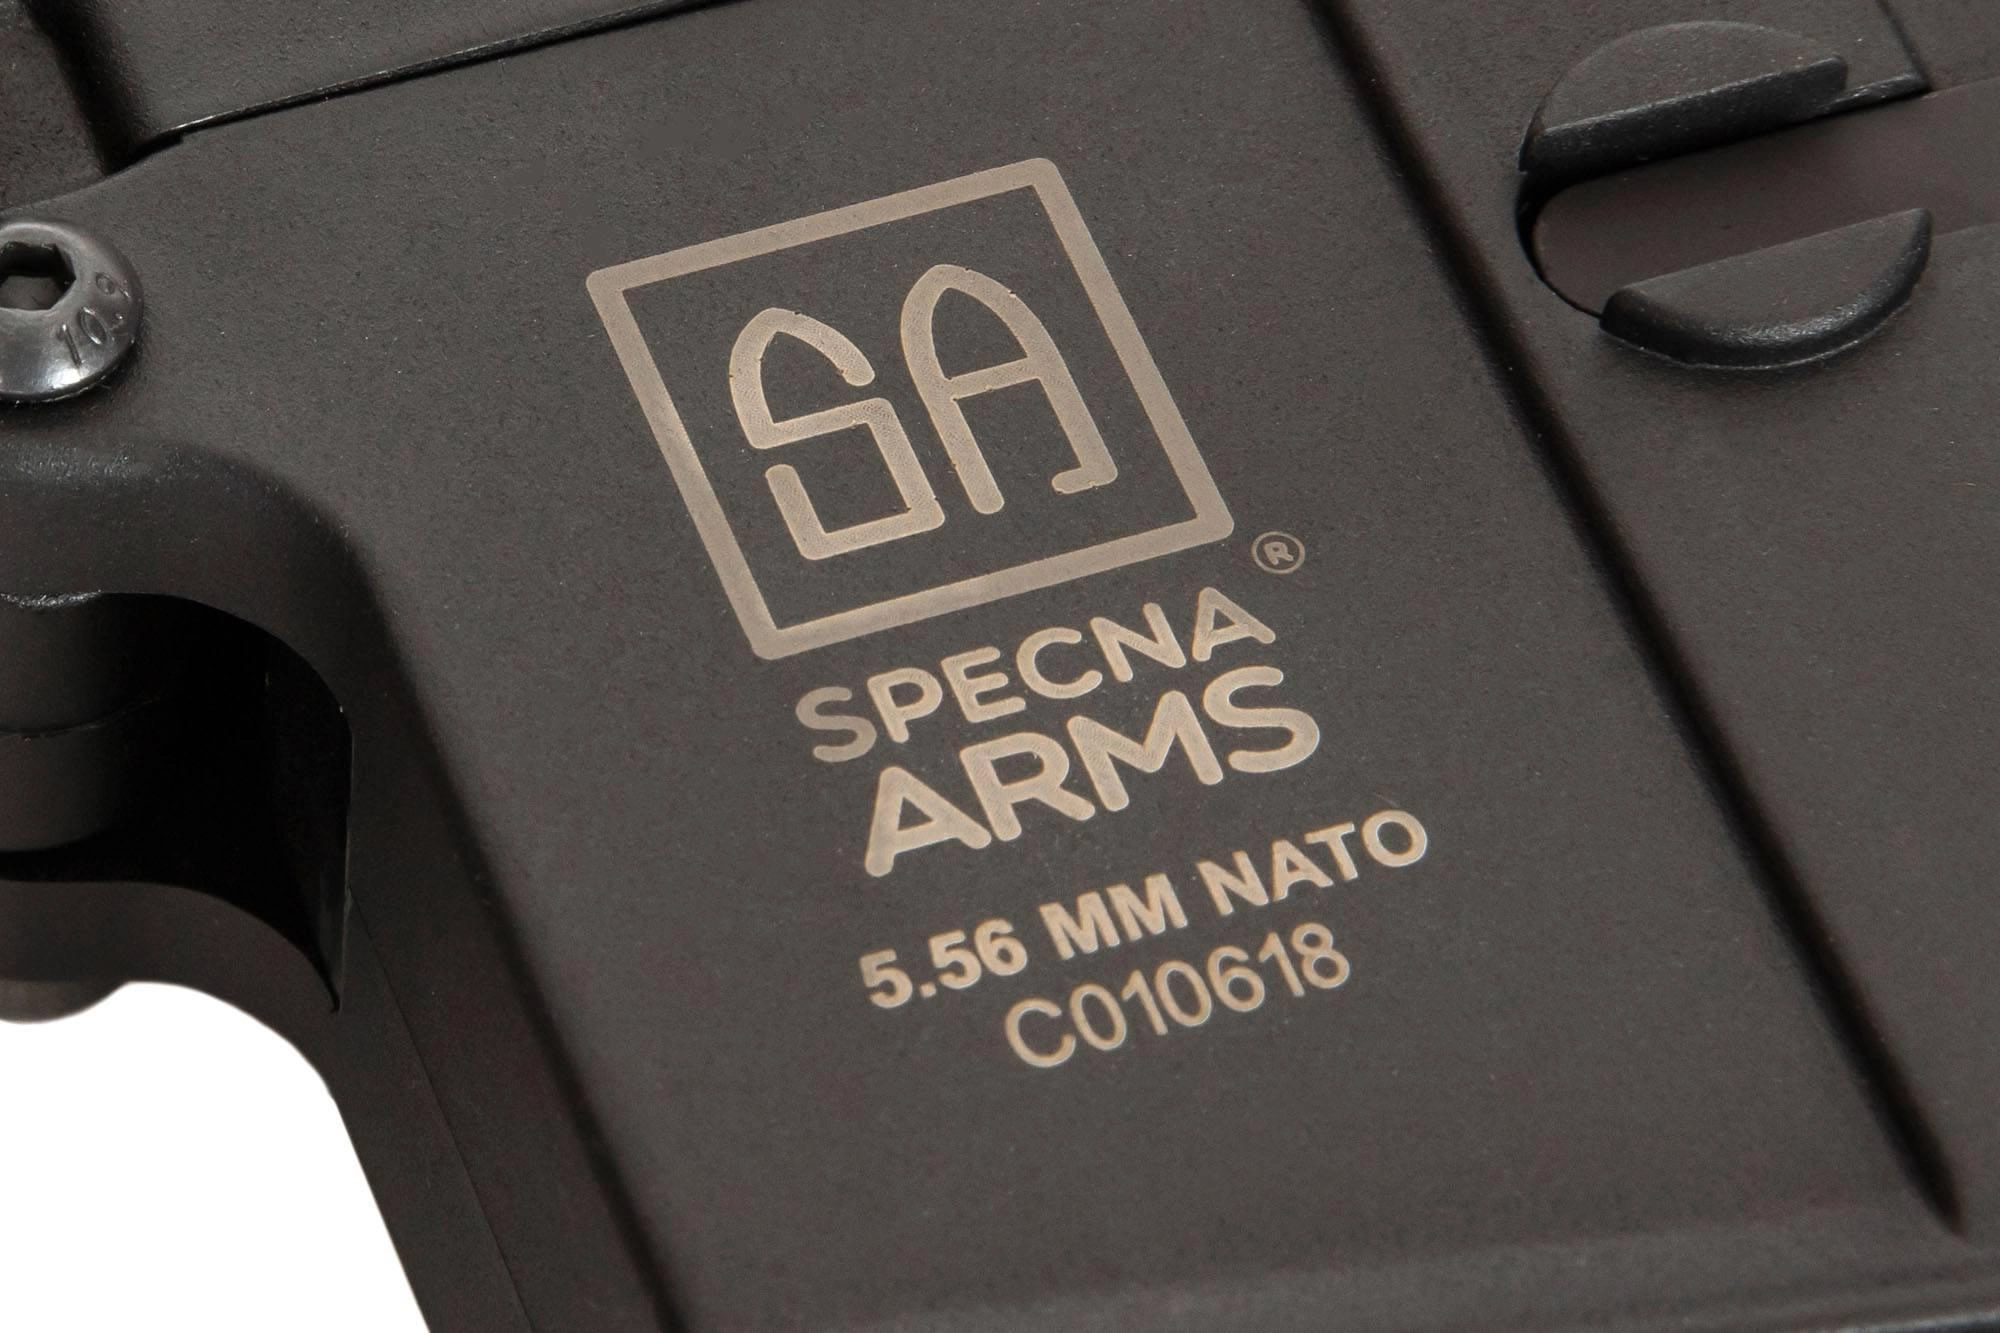 Specna Arms SA-C25 CORE sähköase - Chaos Bronze